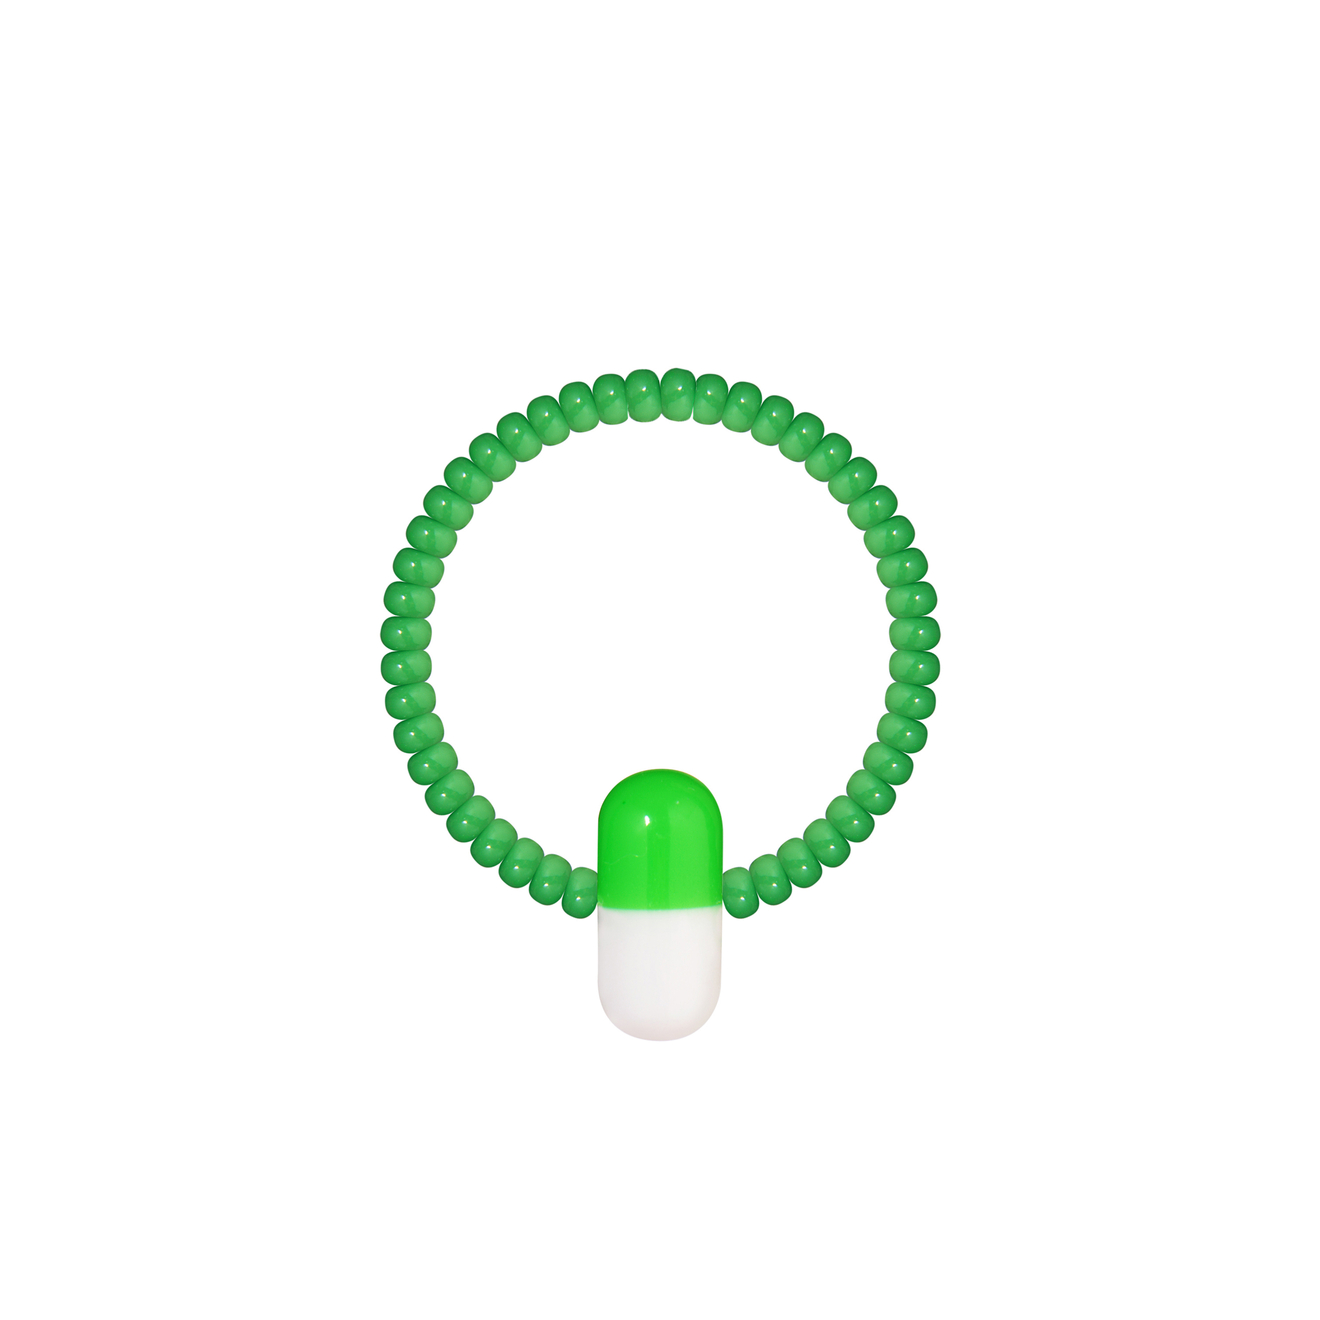 Maniovich AM Зеленое кольцо с пилюлей maniovich am зеленое кольцо с глазом green evil eye